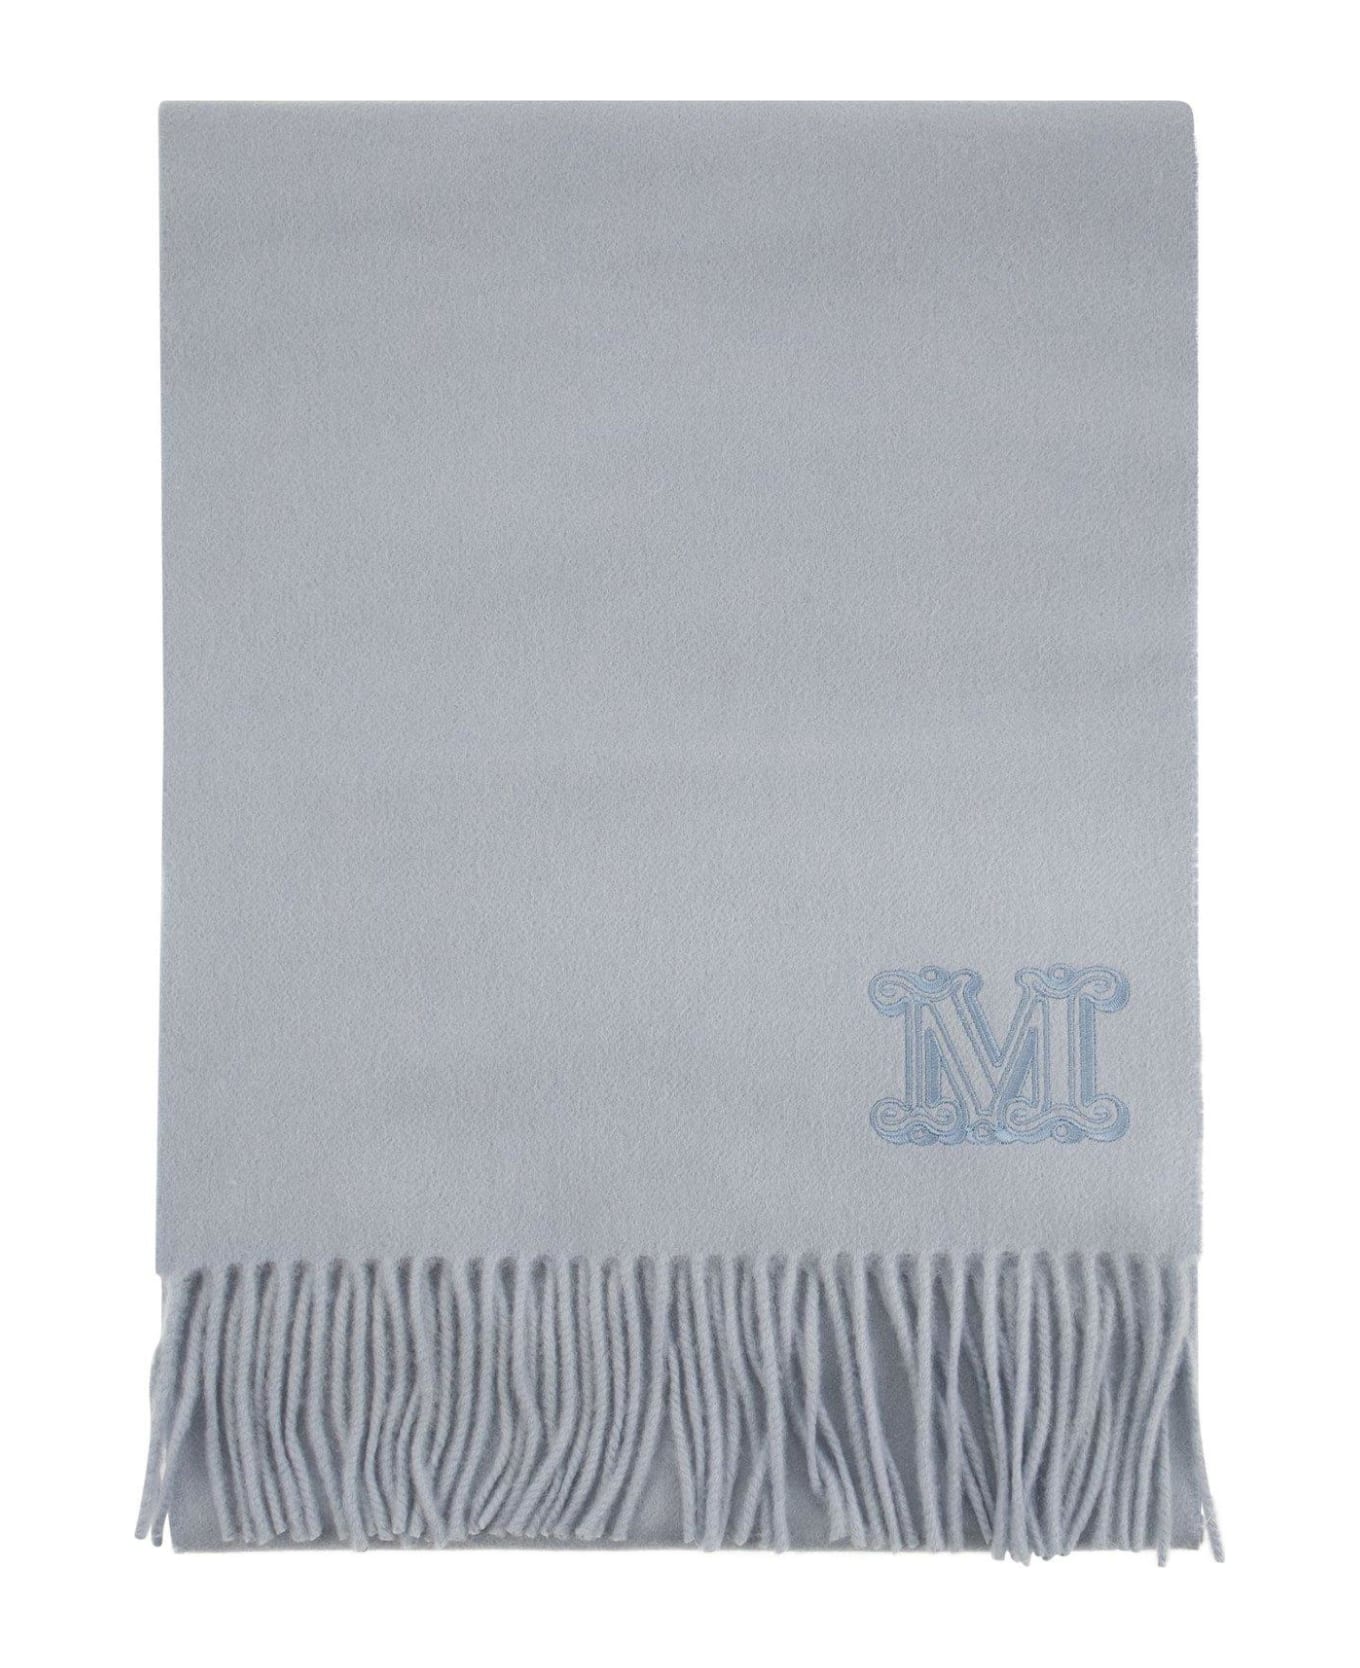 Max Mara Logo Embroidered Fringed Knit Scarf Max Mara - LIGHT BLUE